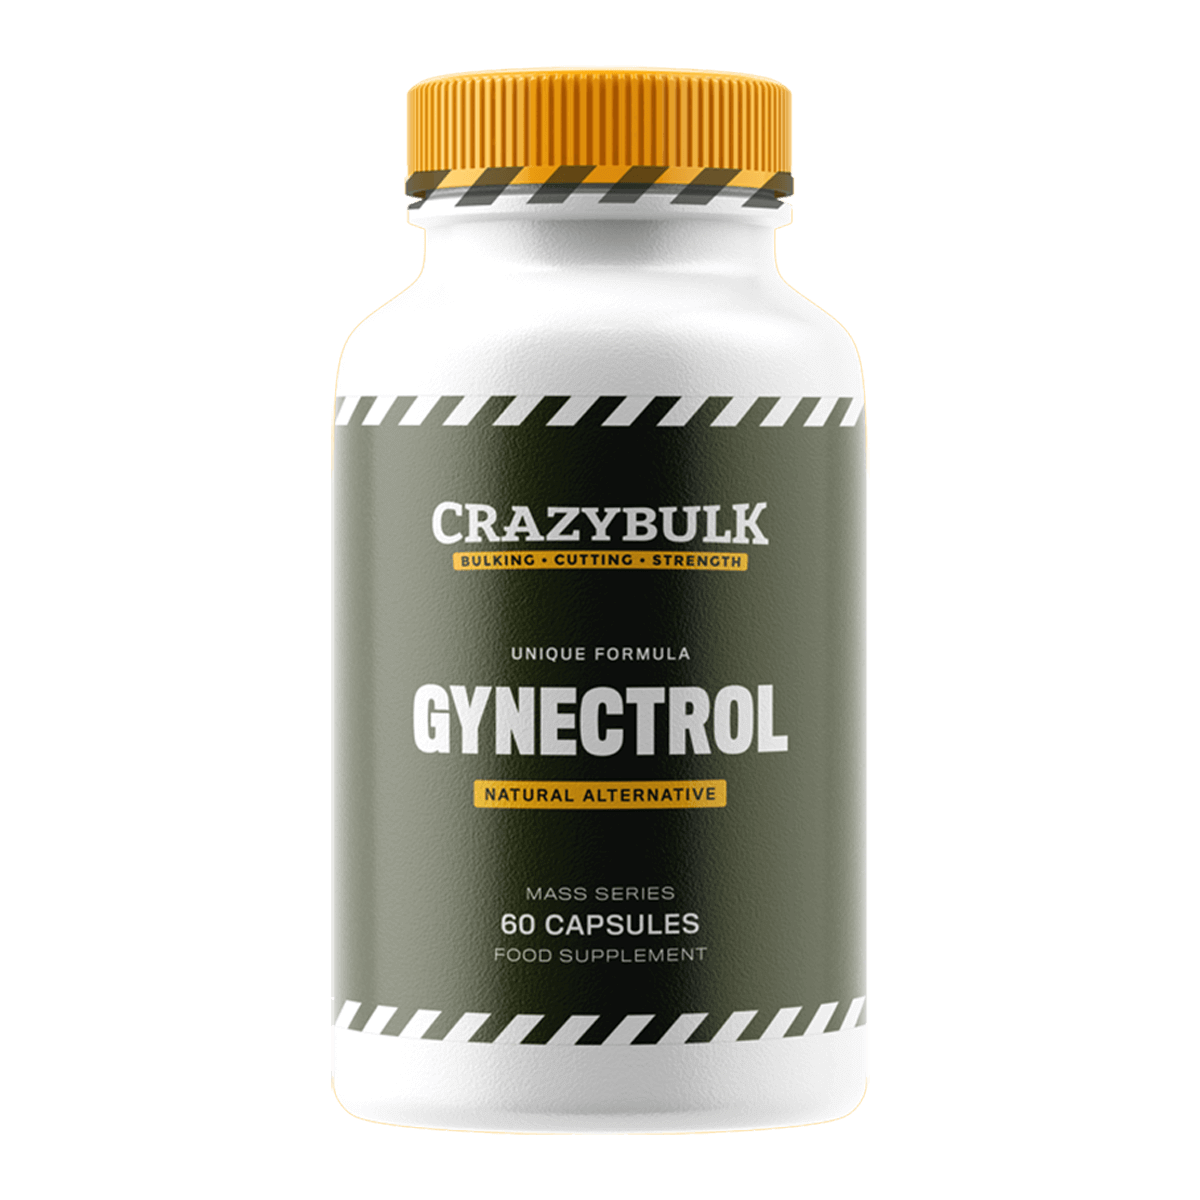 Gynectrol-bottle-purchase